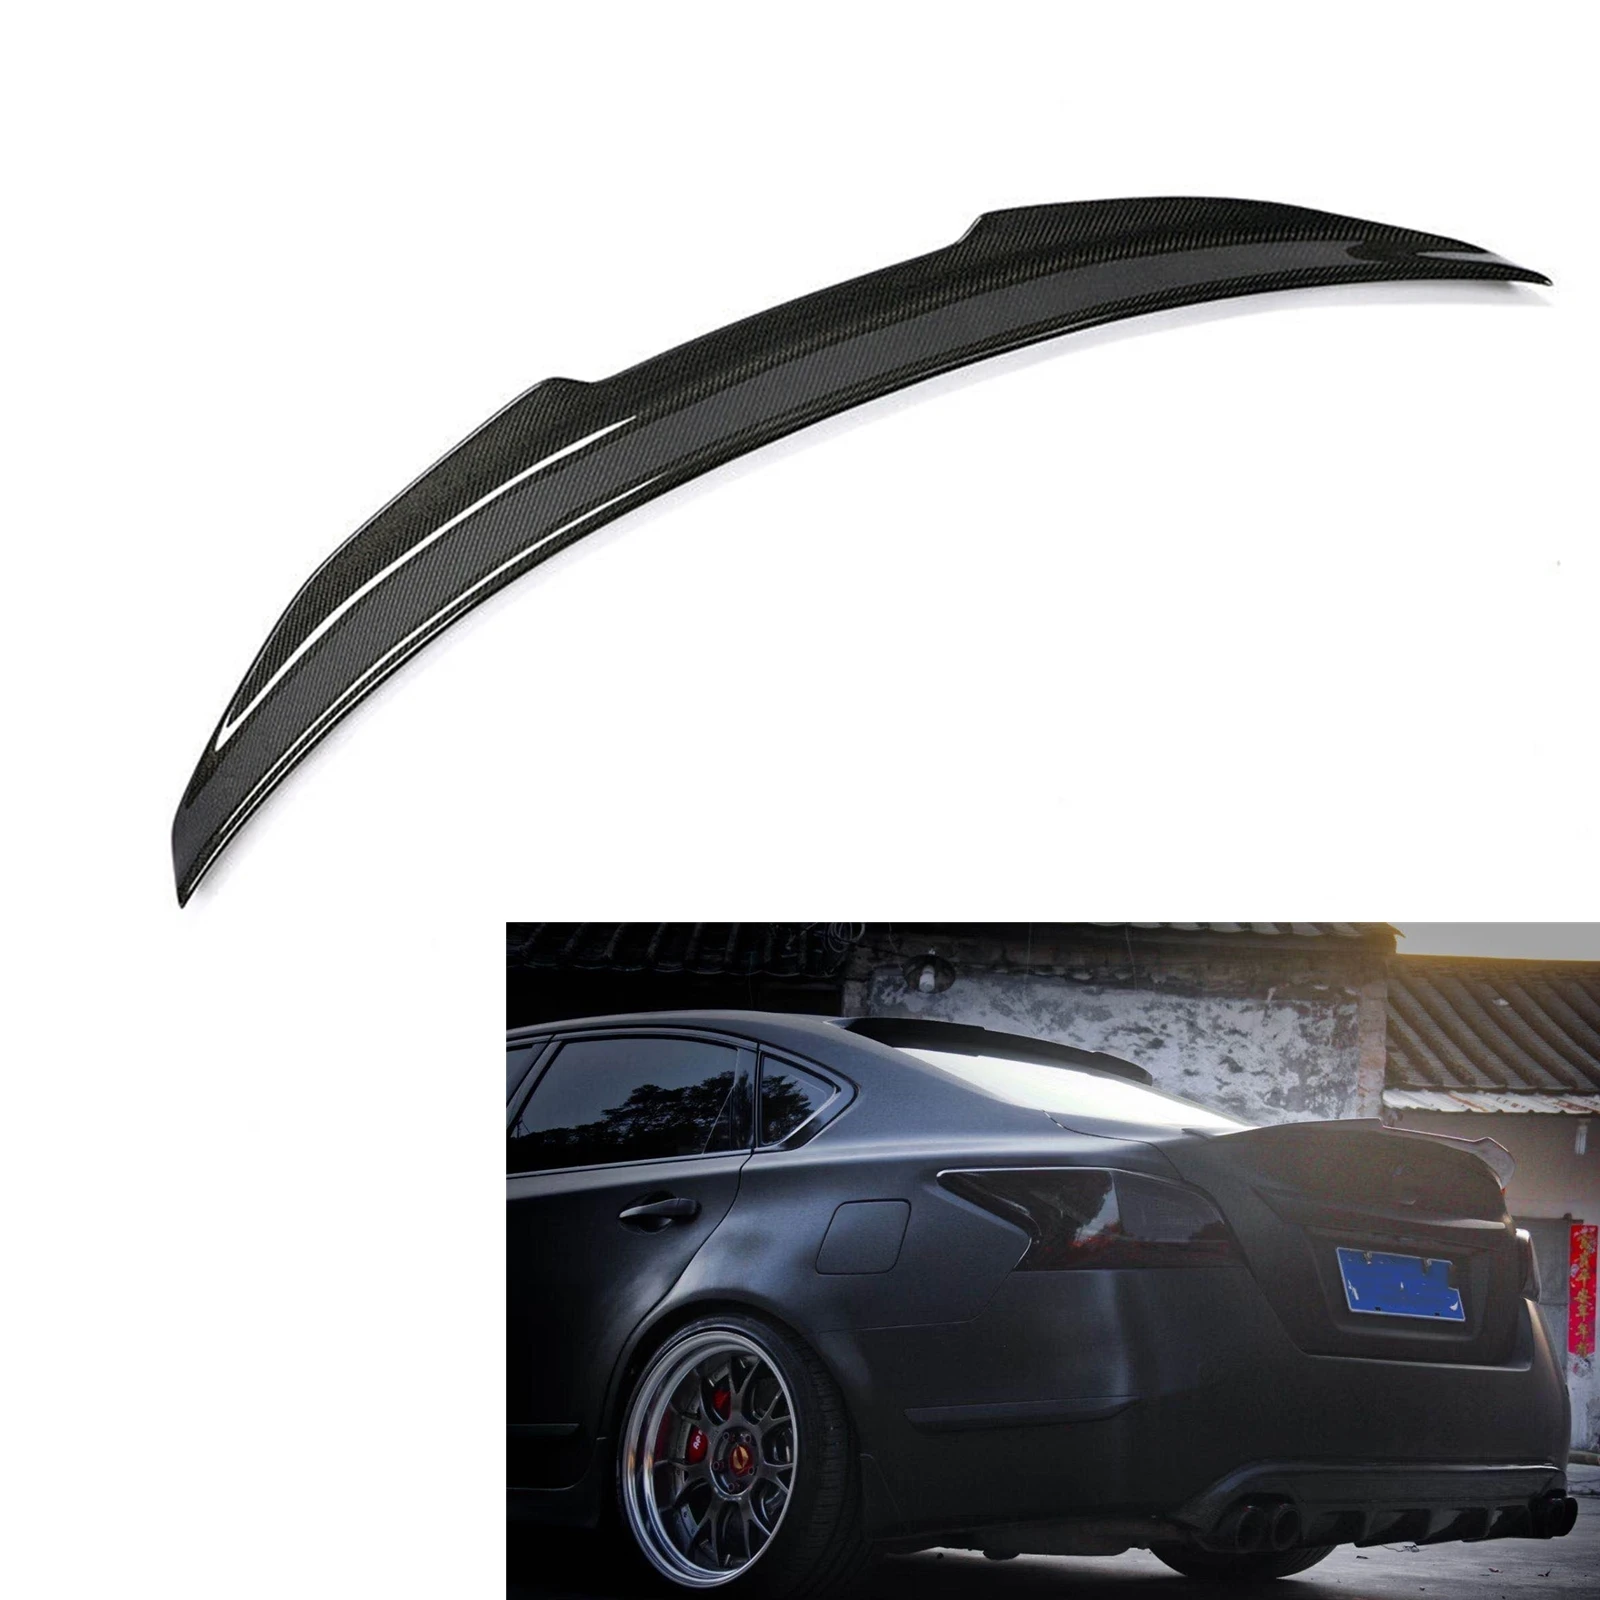 

For Nissan Altima 2013-2015 Sedan 4 Door PSM Style Rear Spoiler Wing Real Carbon Fiber Car Trunk Lid Trim Decklid Splitter Lip